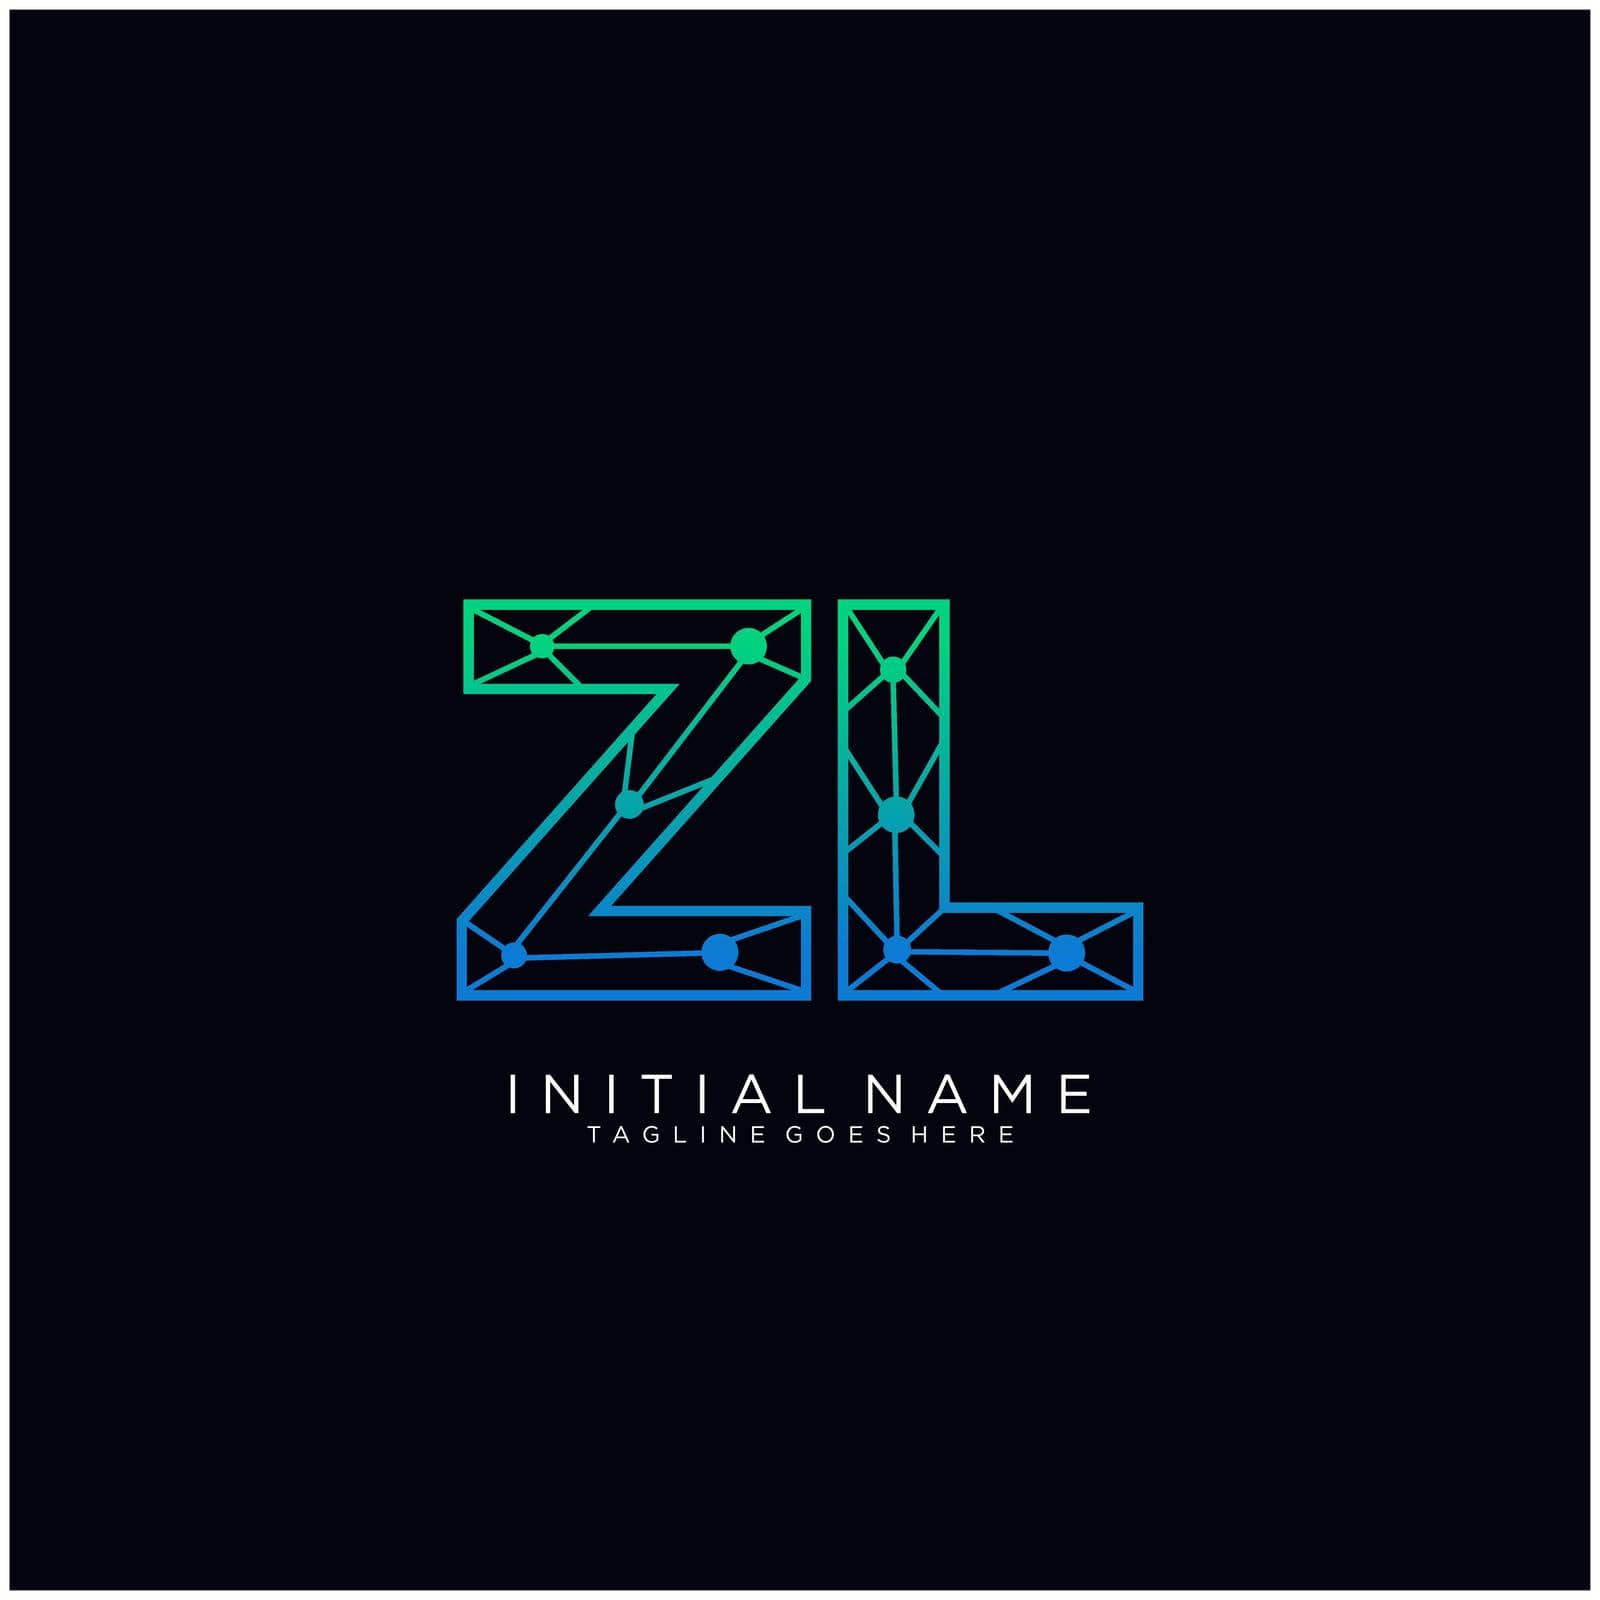 ZL Letter logo icon design template elements by liaanniesatul